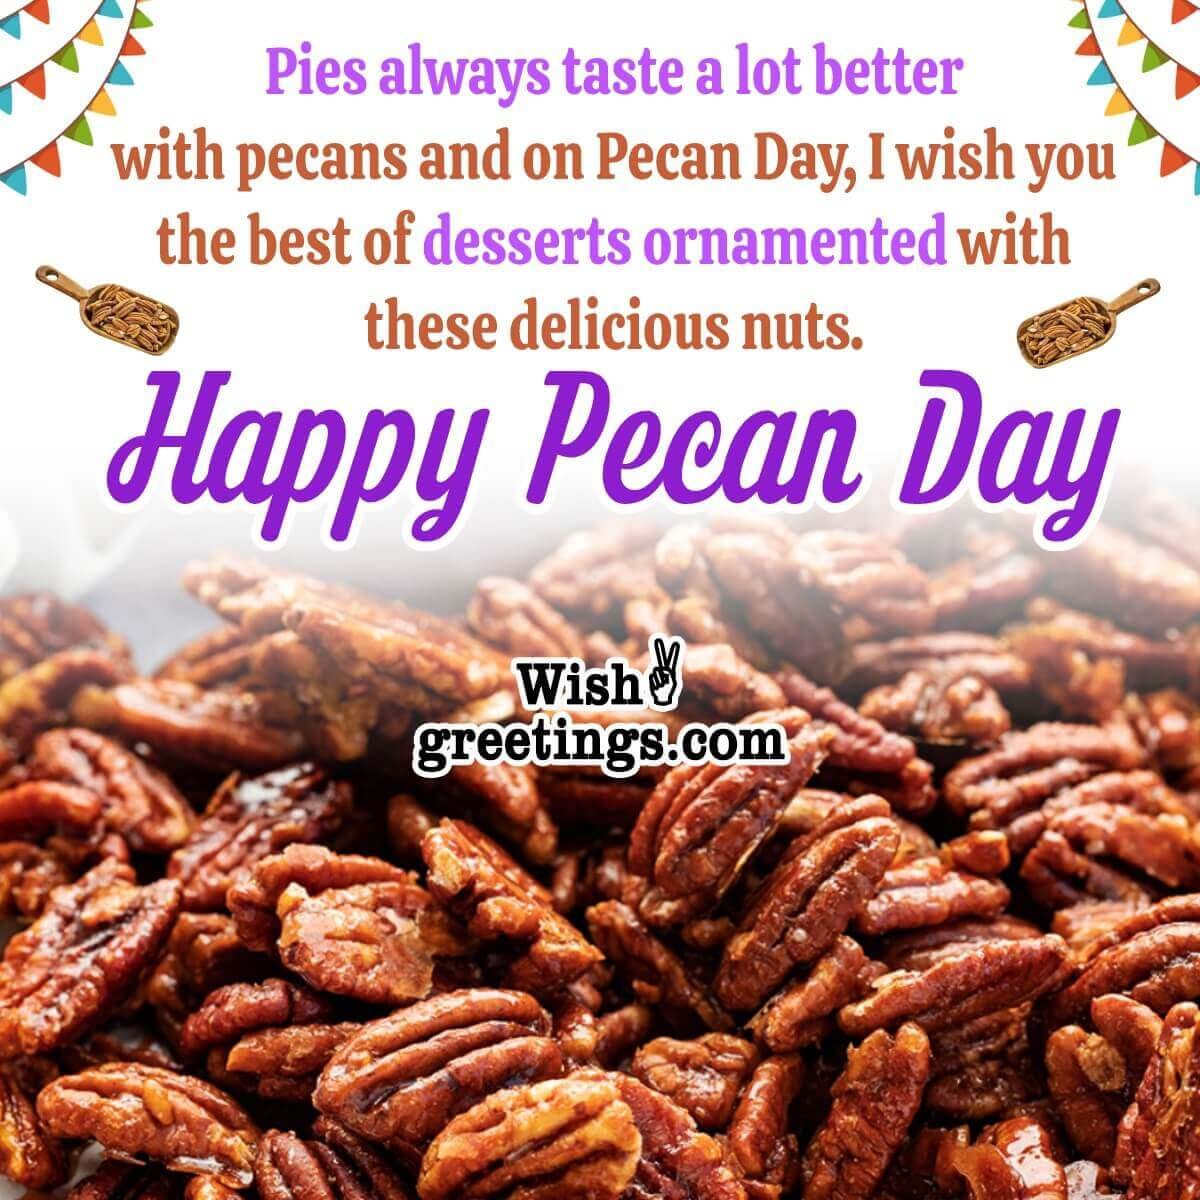 Happy Pecan Day Greeting Image